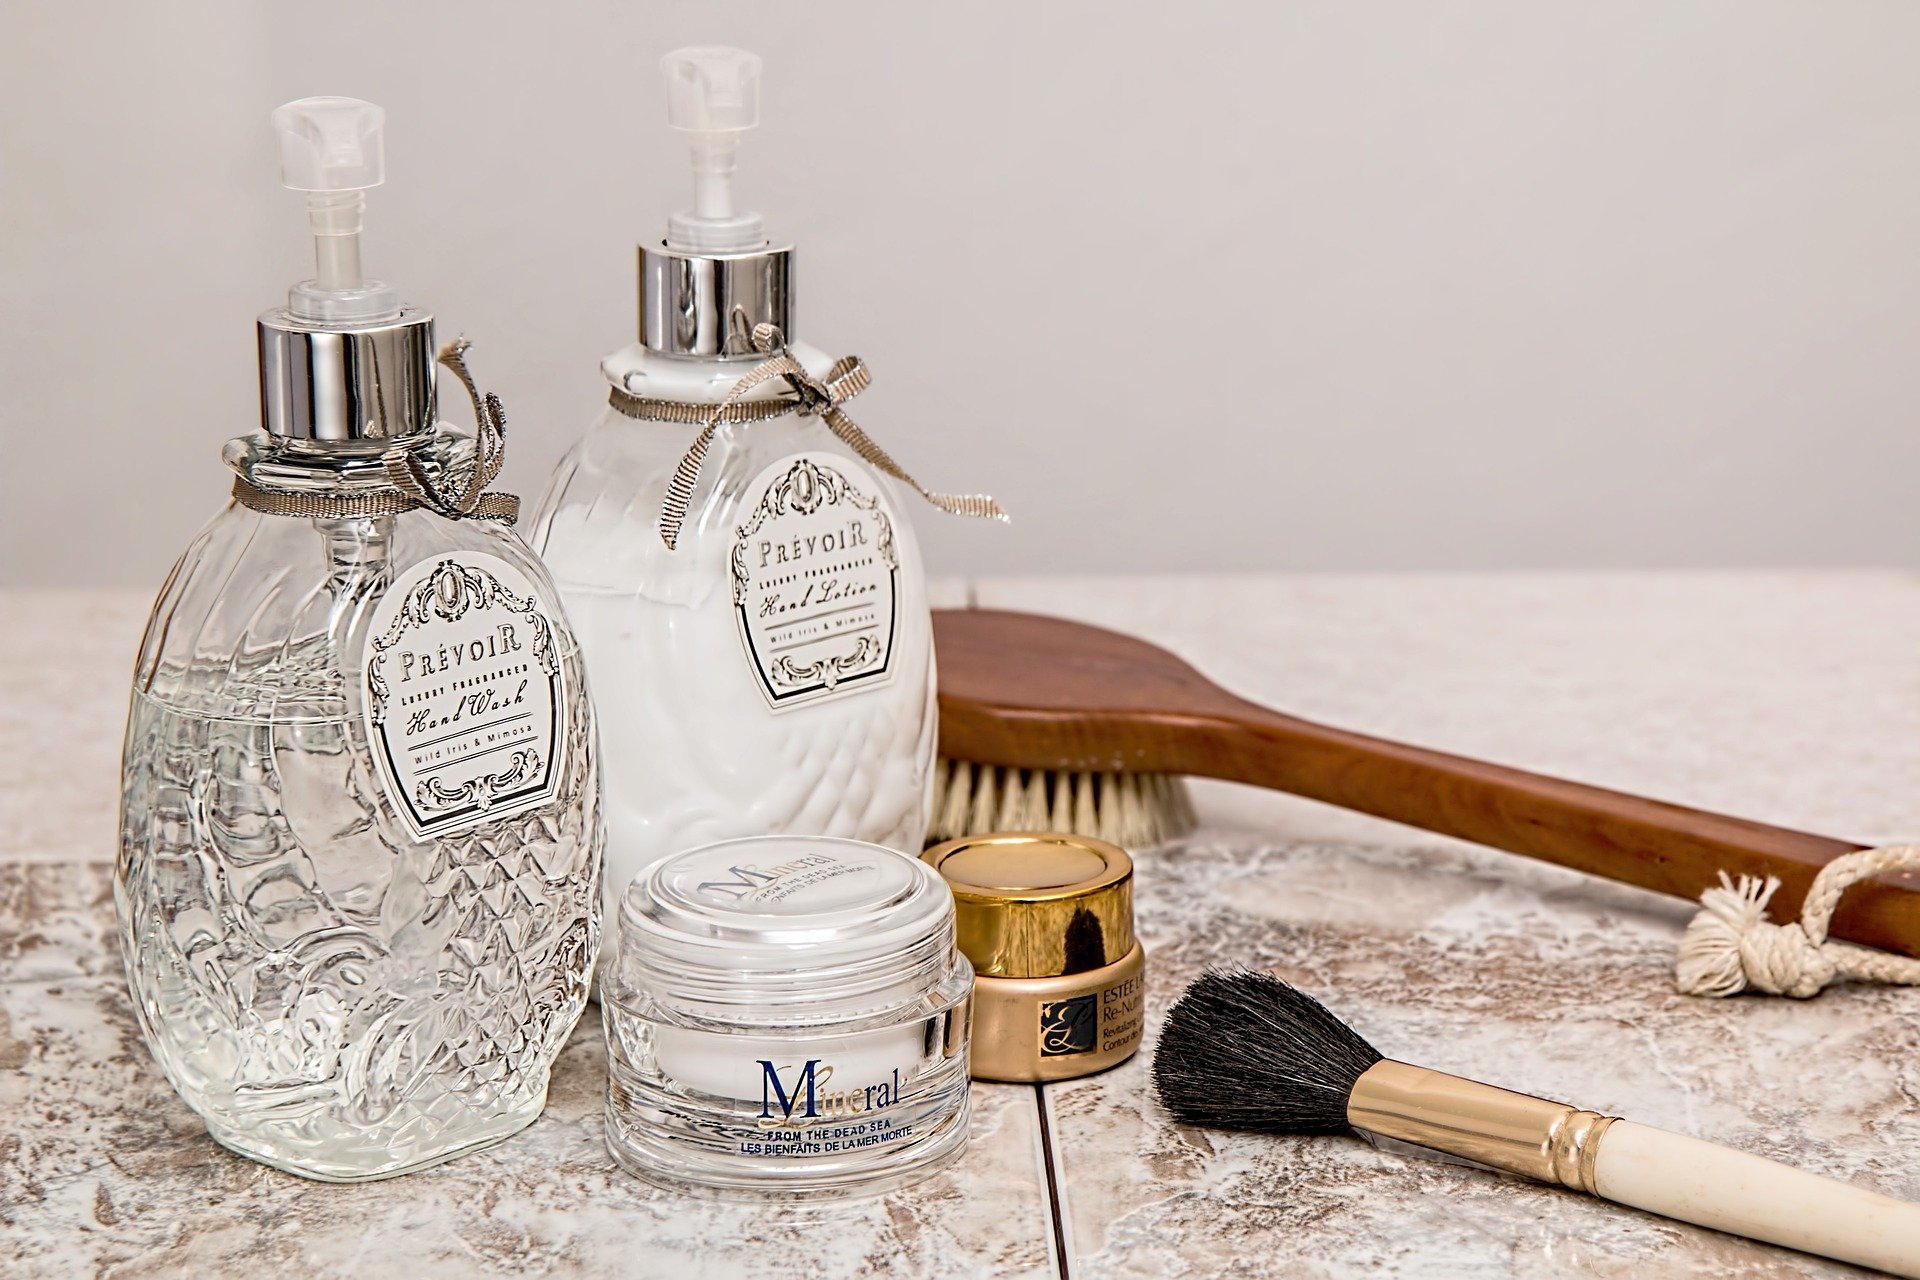 Des parfums. | Photo : Pixabay